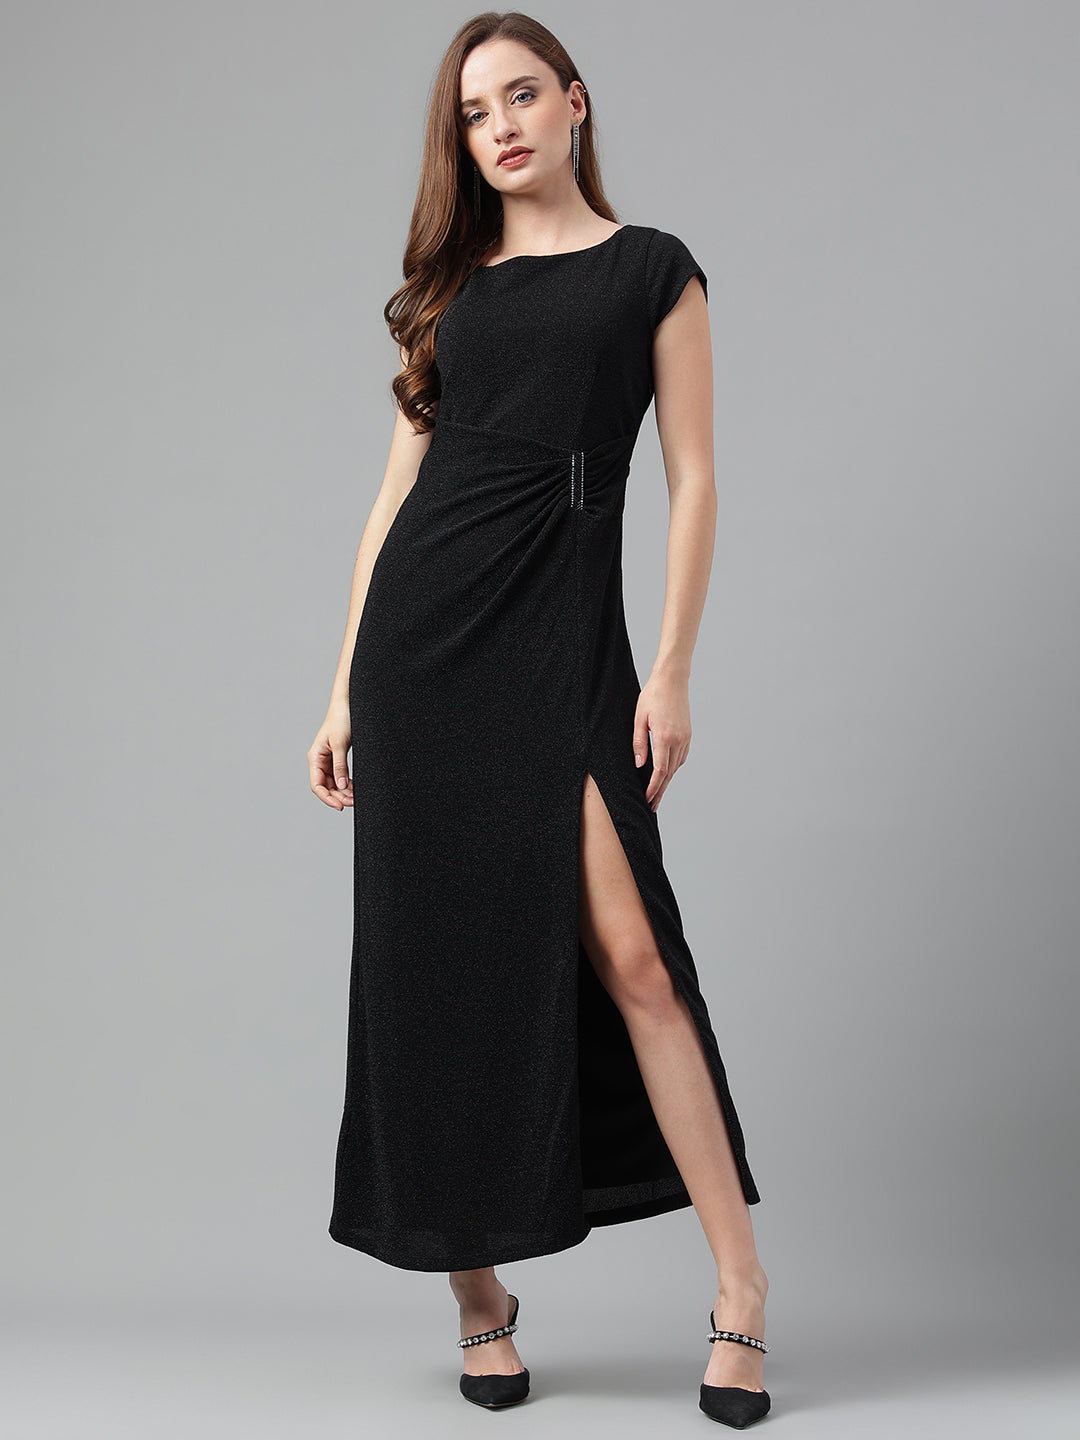 Black CapSleeve Solid Dress